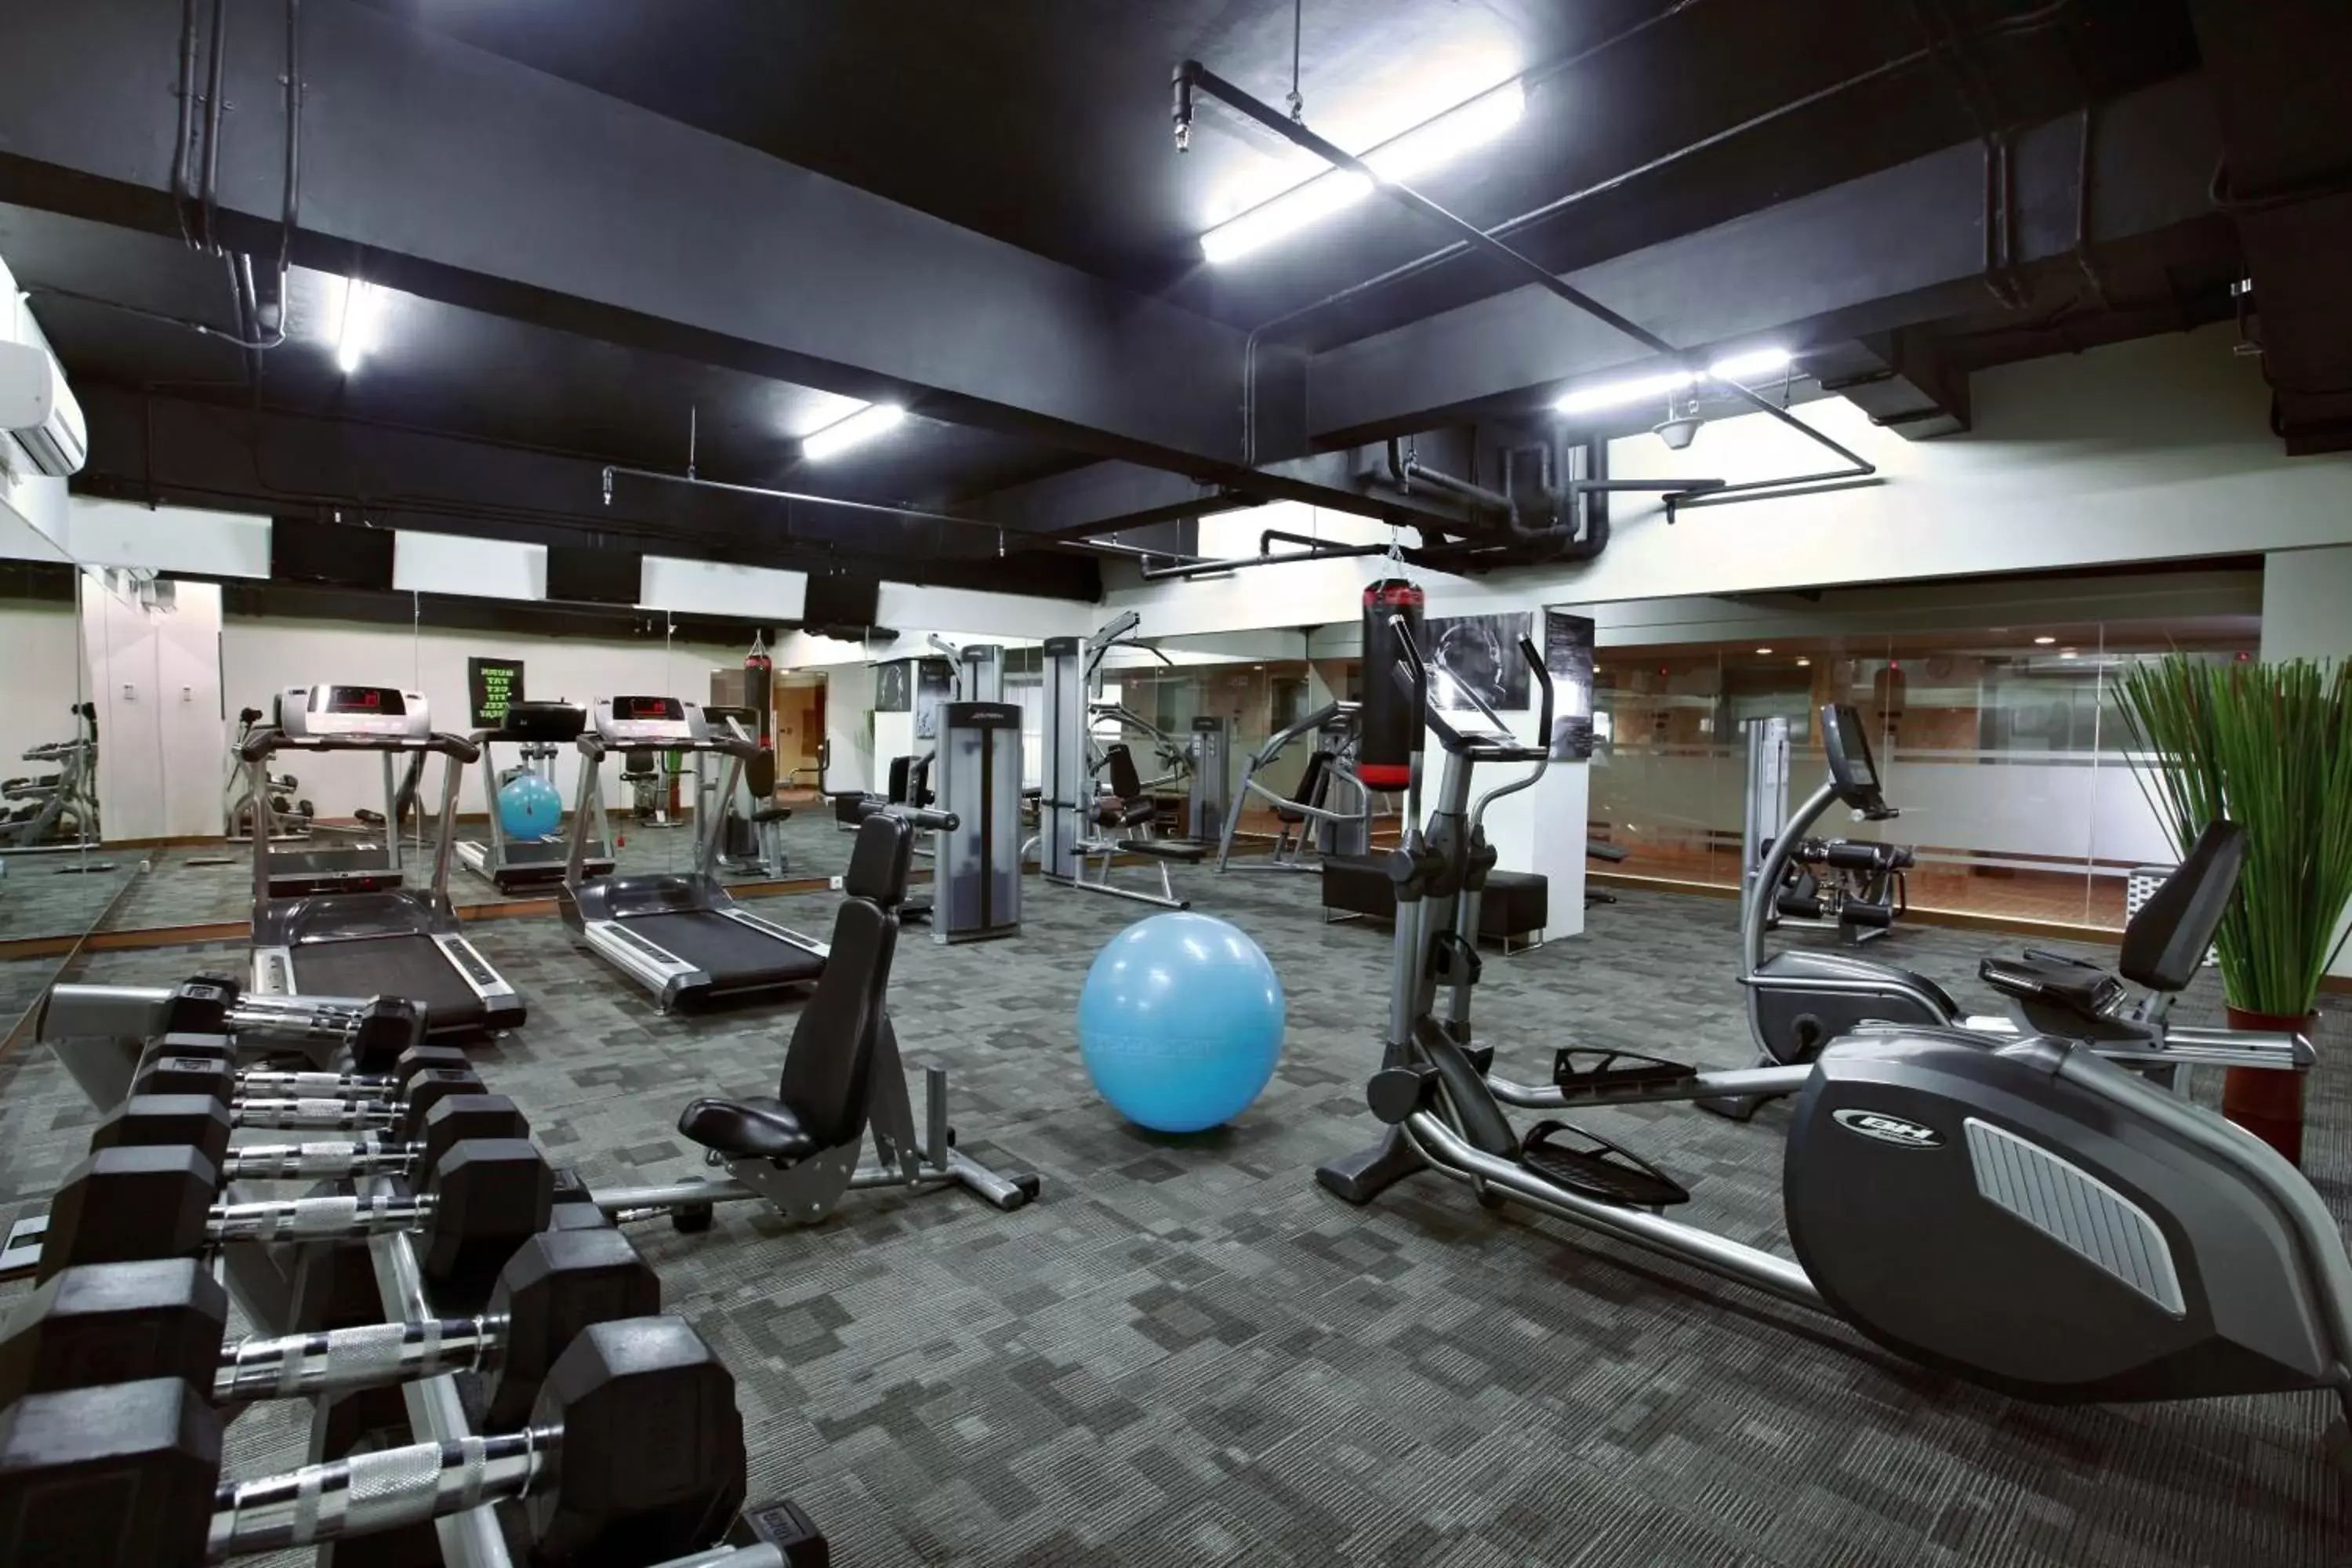 Fitness centre/facilities, Fitness Center/Facilities in Atria Hotel Malang